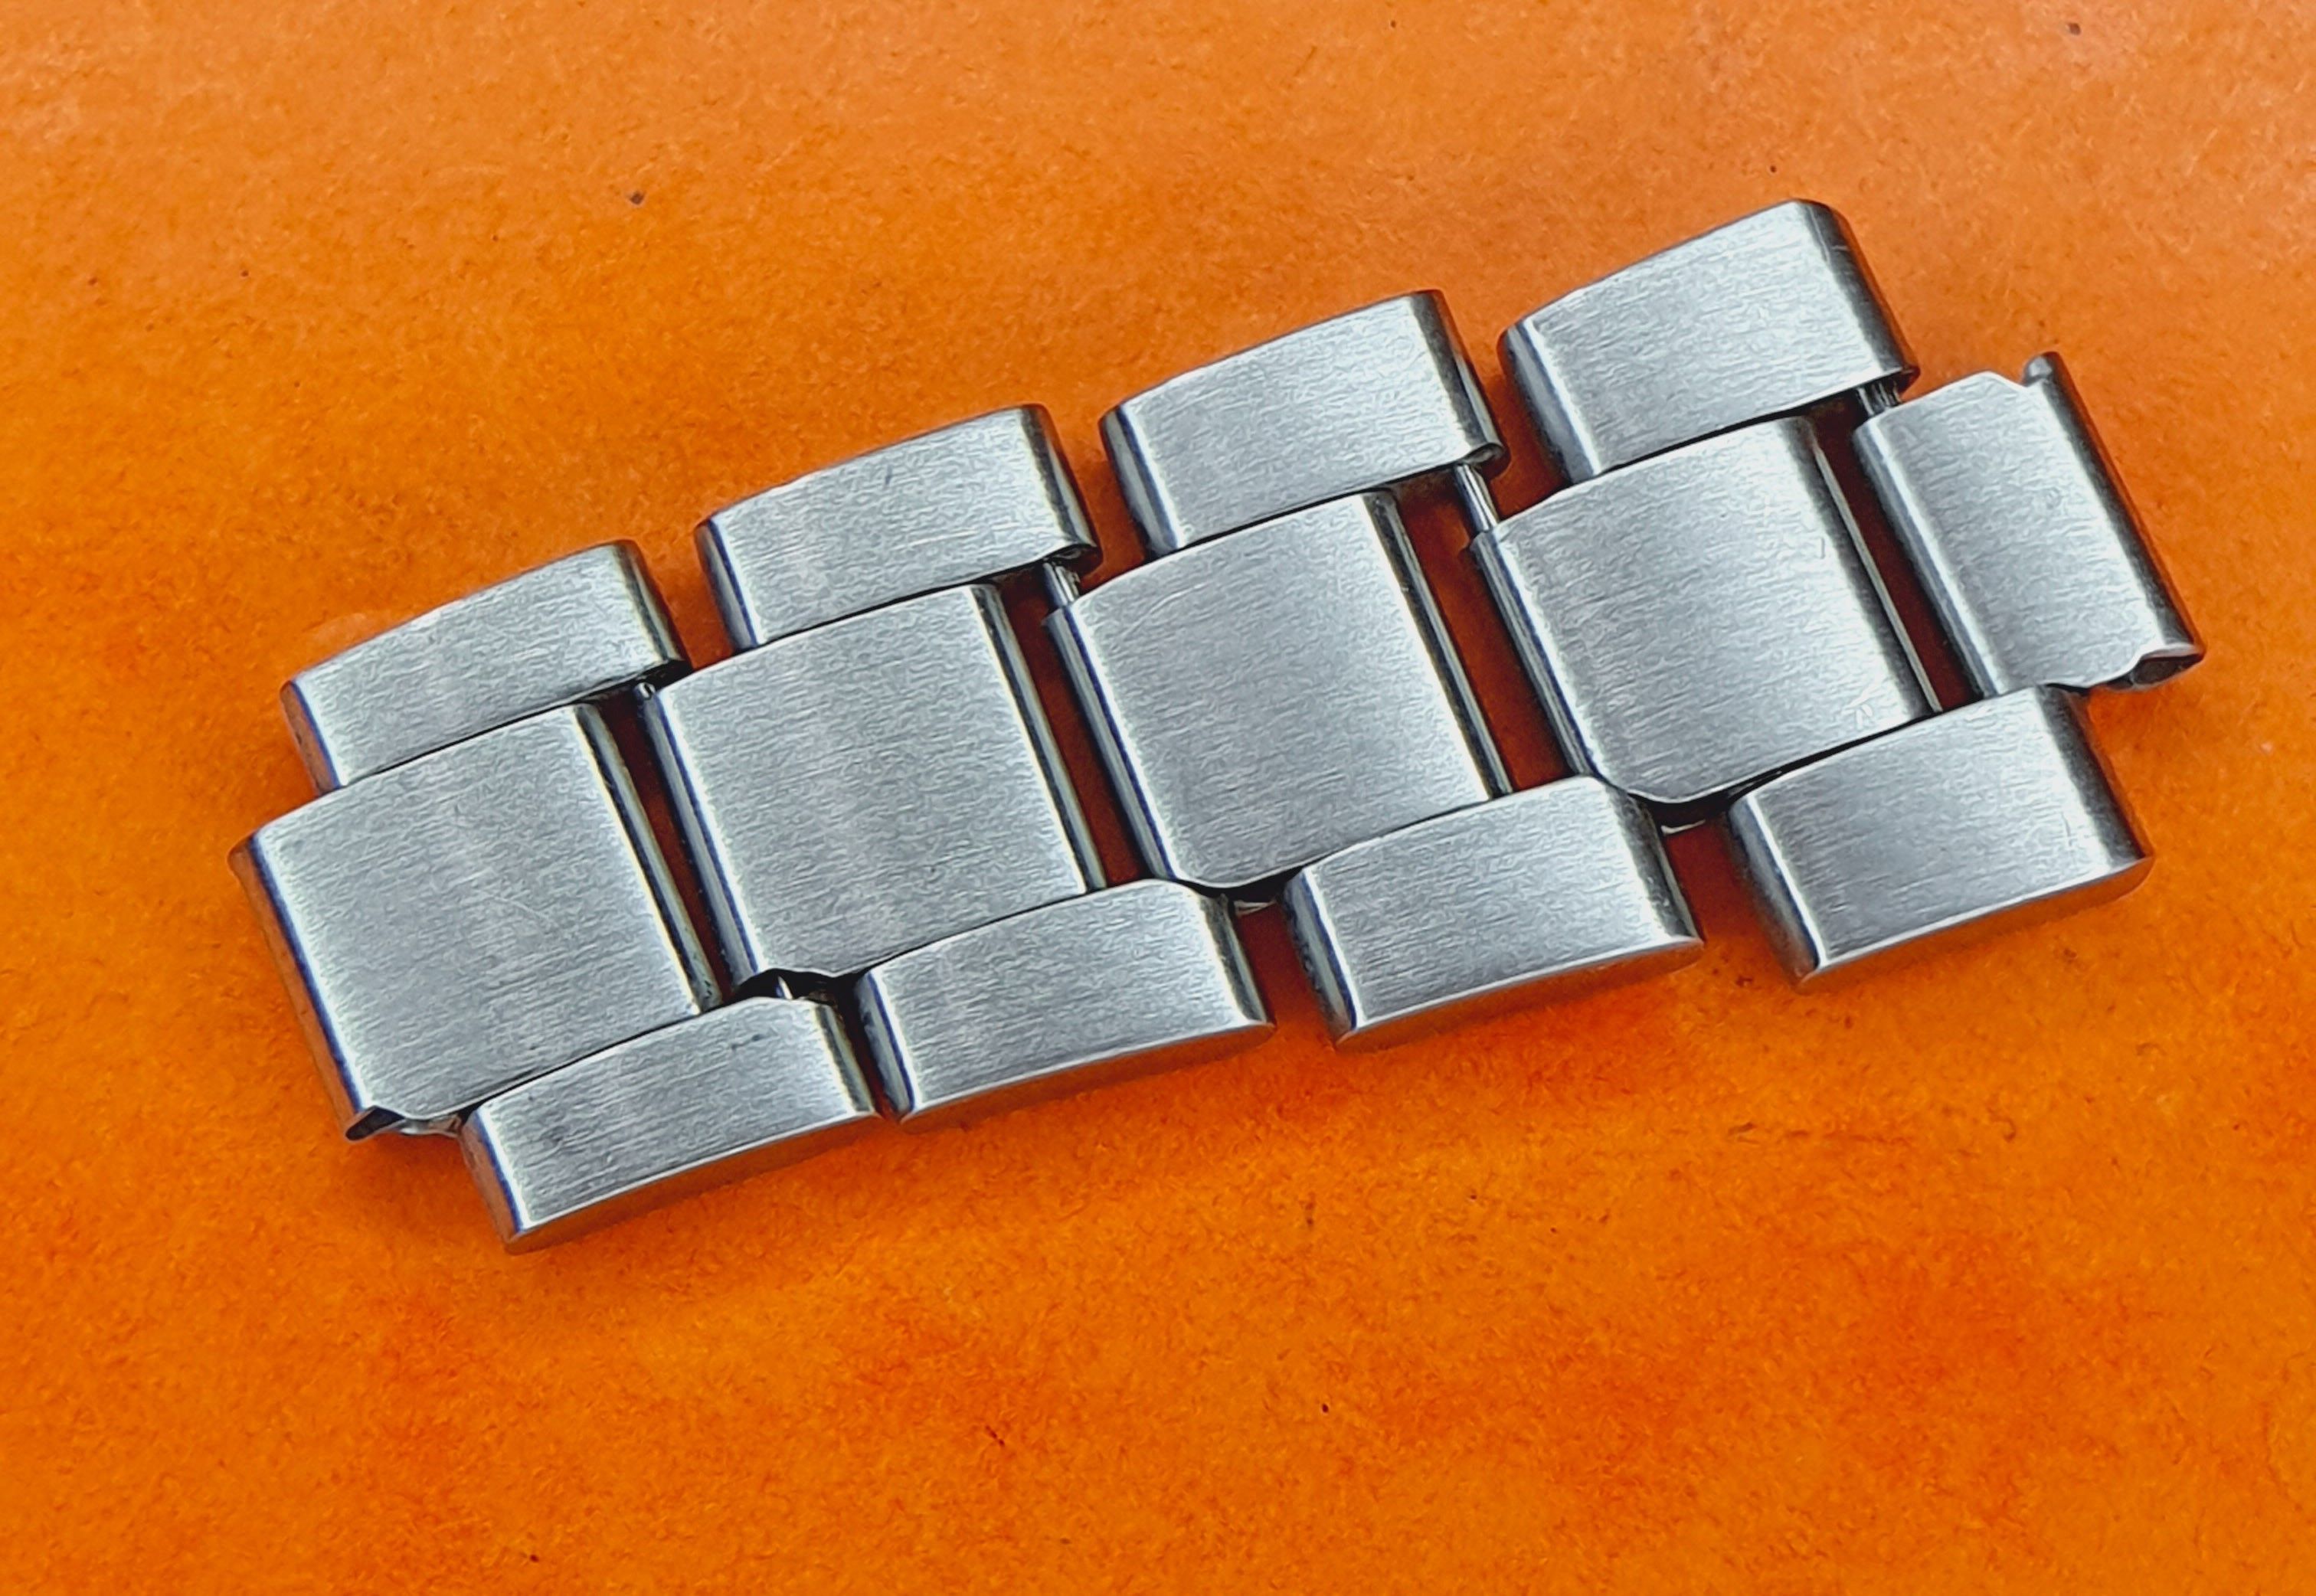 1 x 93153 gold & Ssteel Rolex Oyster bracelet solid links bands spares from  Submariner date